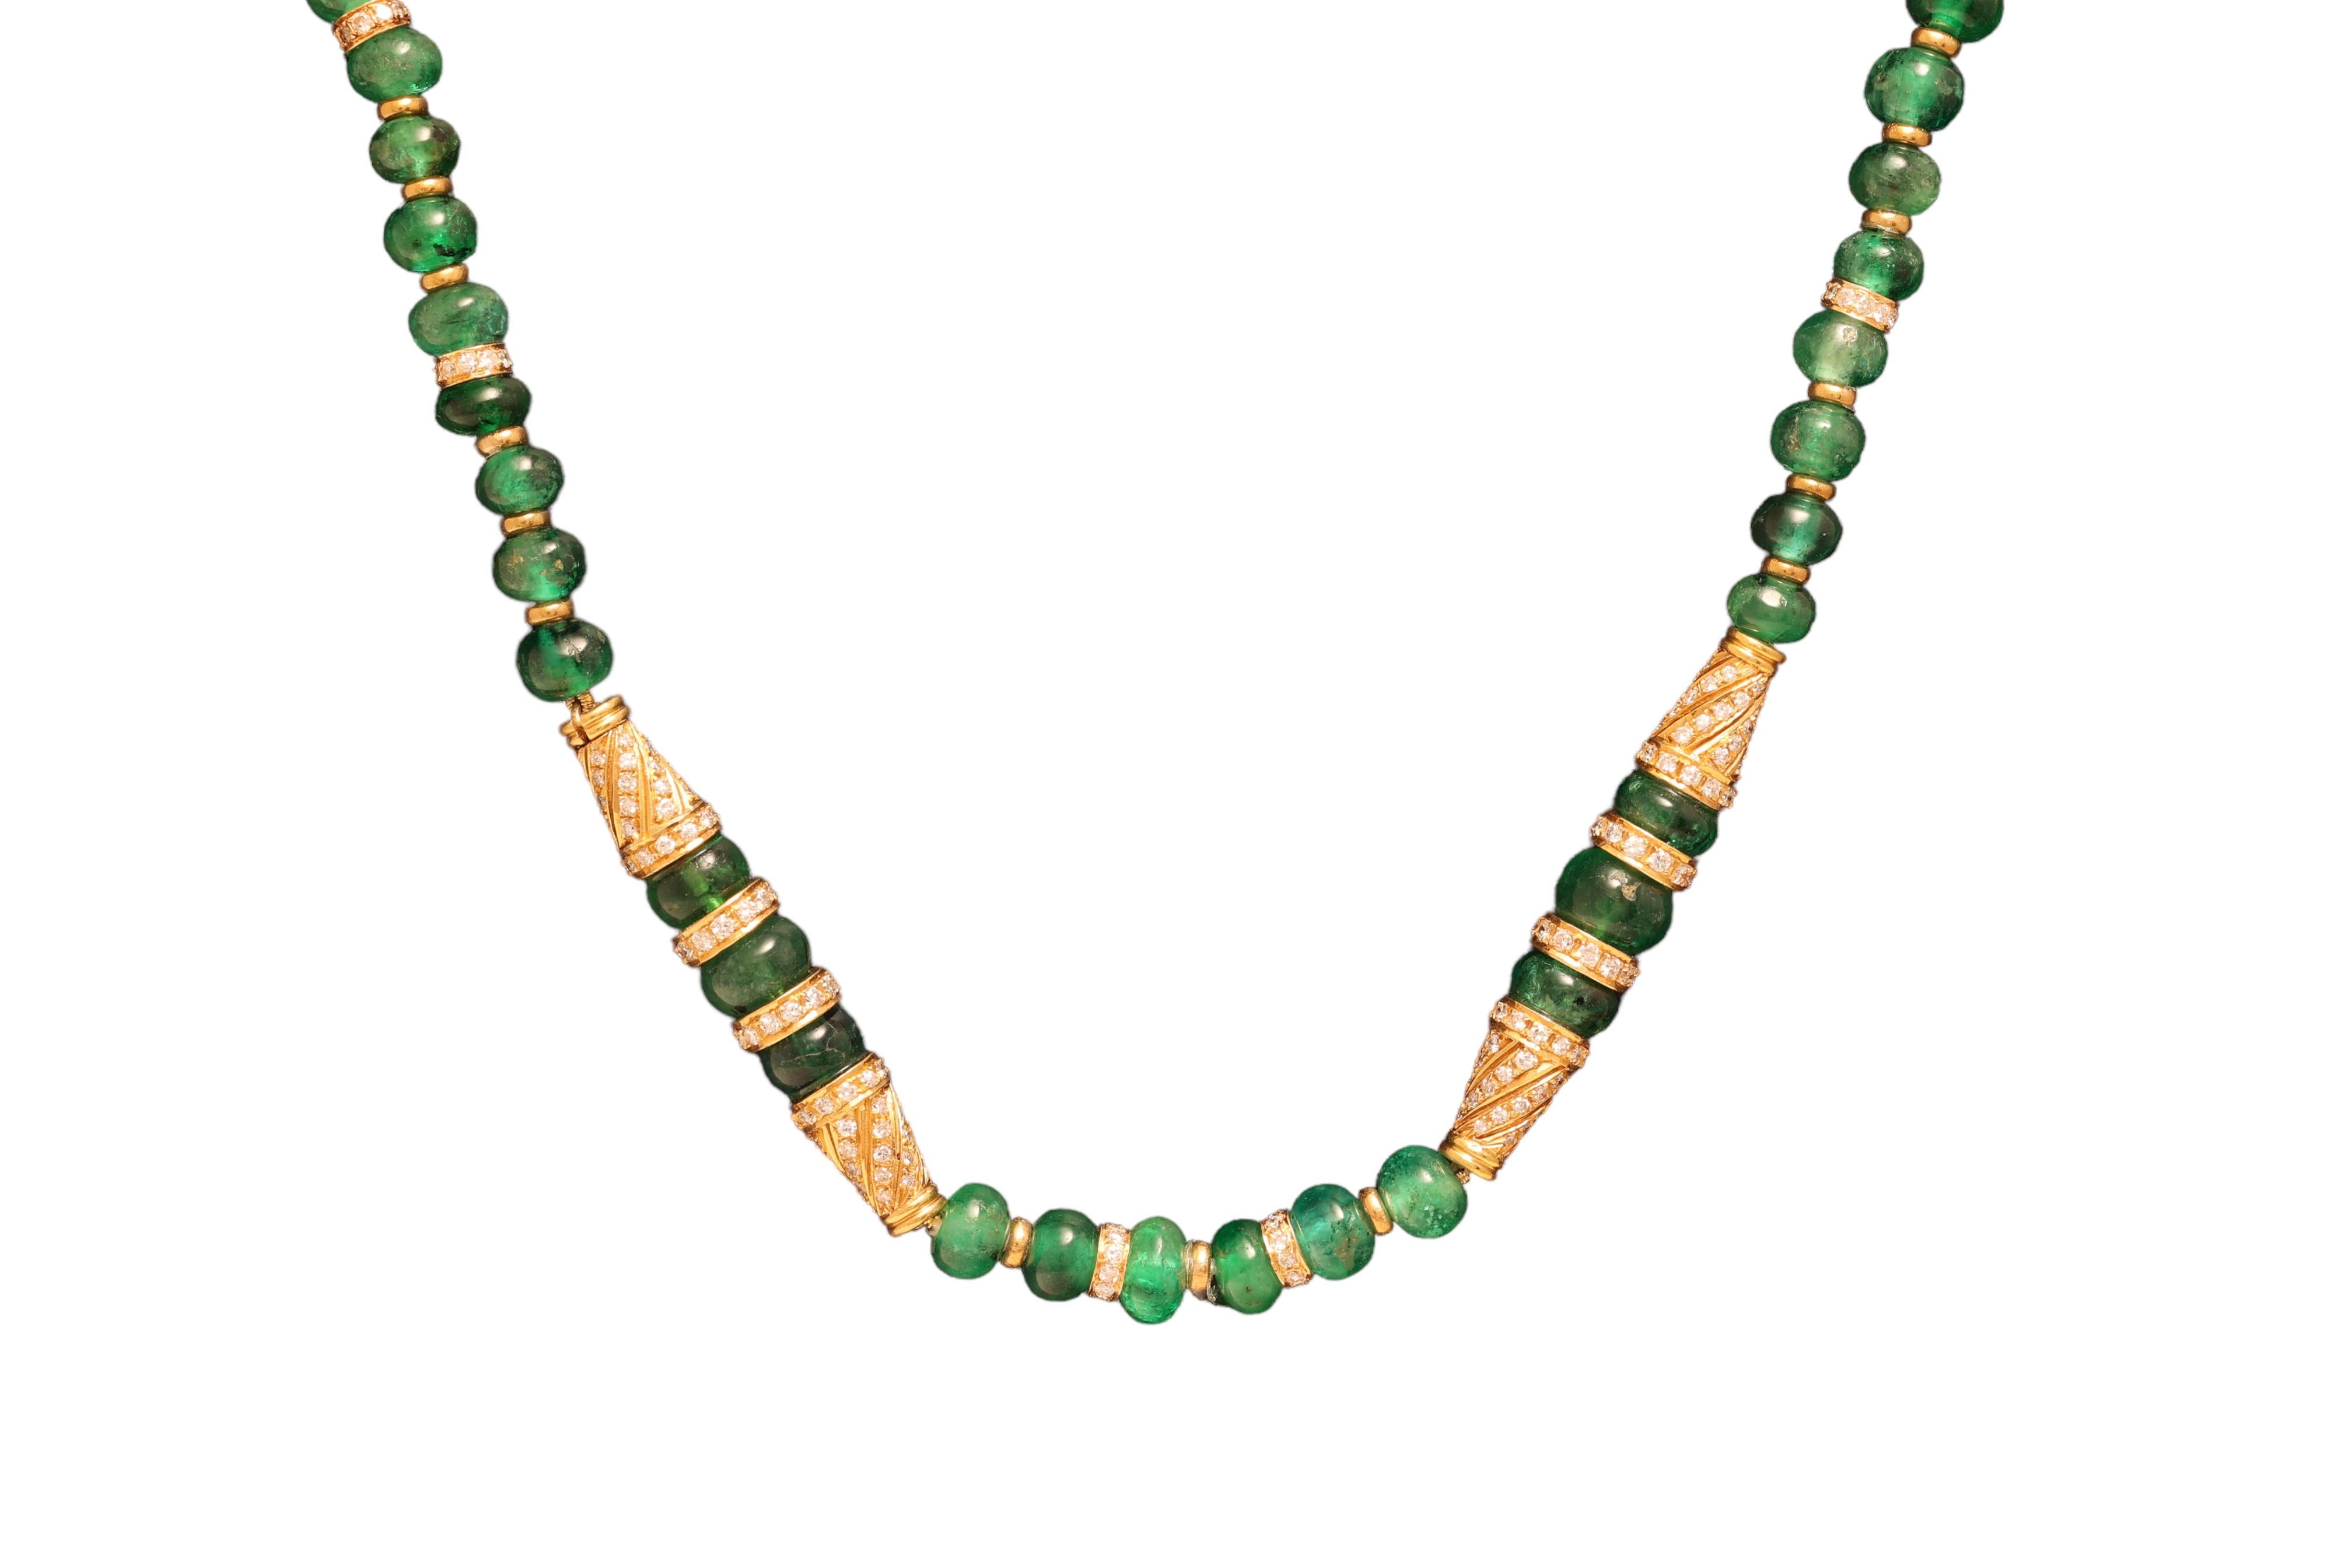 Adler Genèva 18kt Gold Necklaces 480ct Faceted Bead Emeralds CGL Certified For Sale 9